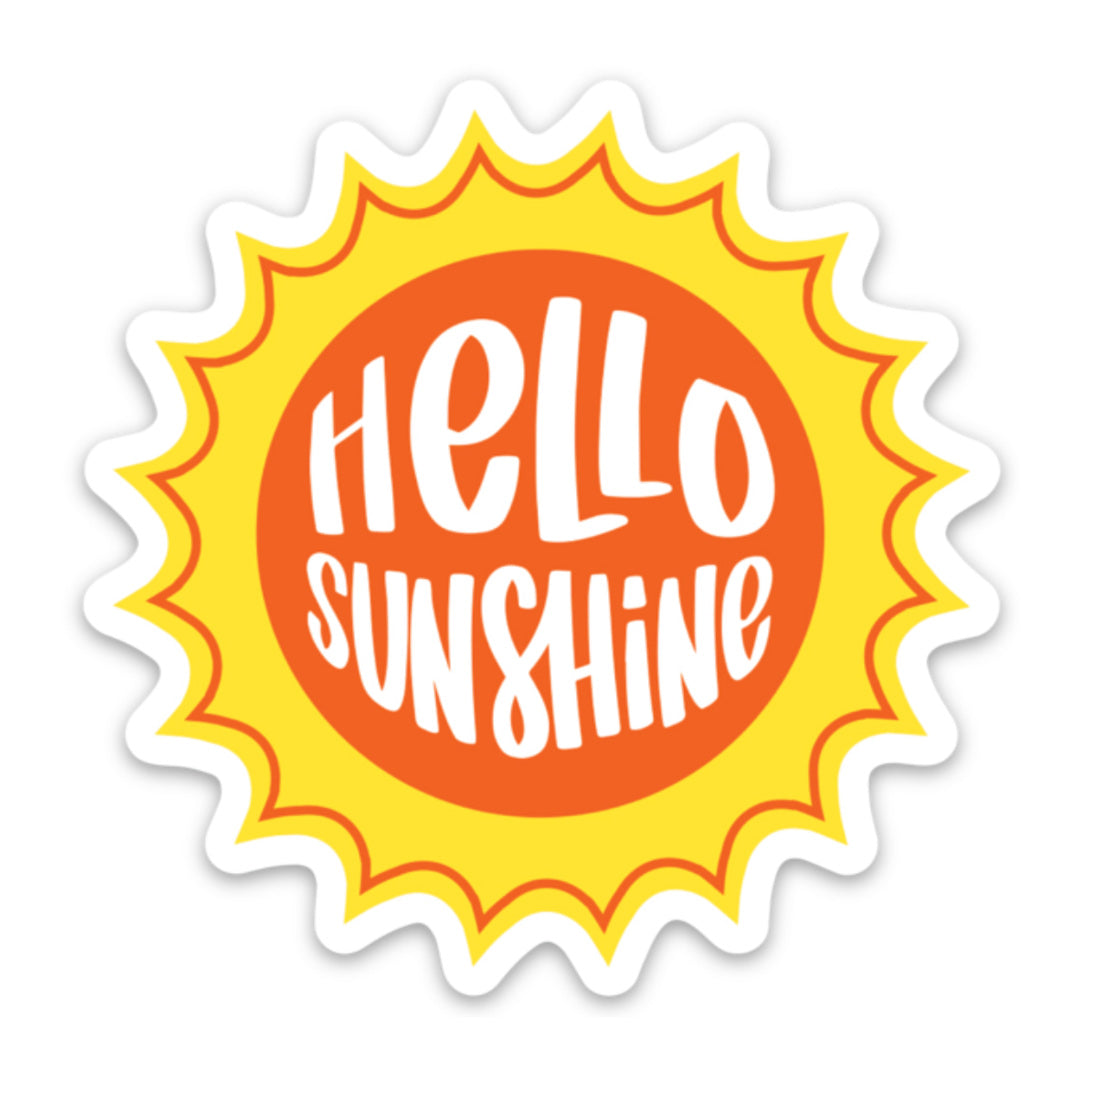 hello-sunshine-orange-yellow-sticker.jpg